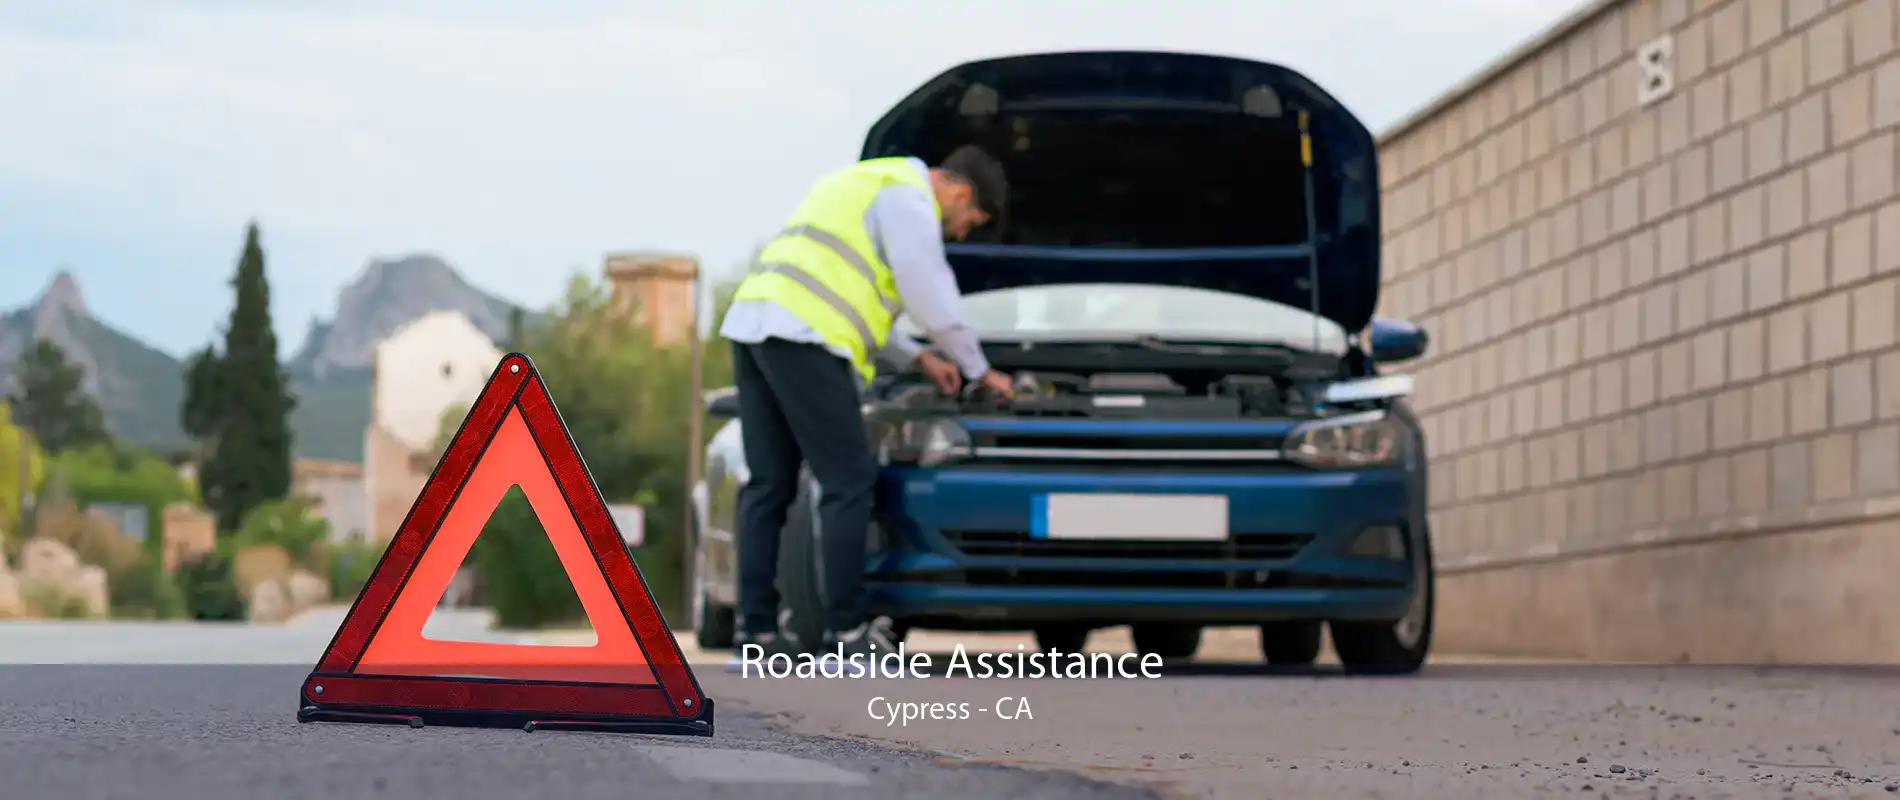 Roadside Assistance Cypress - CA